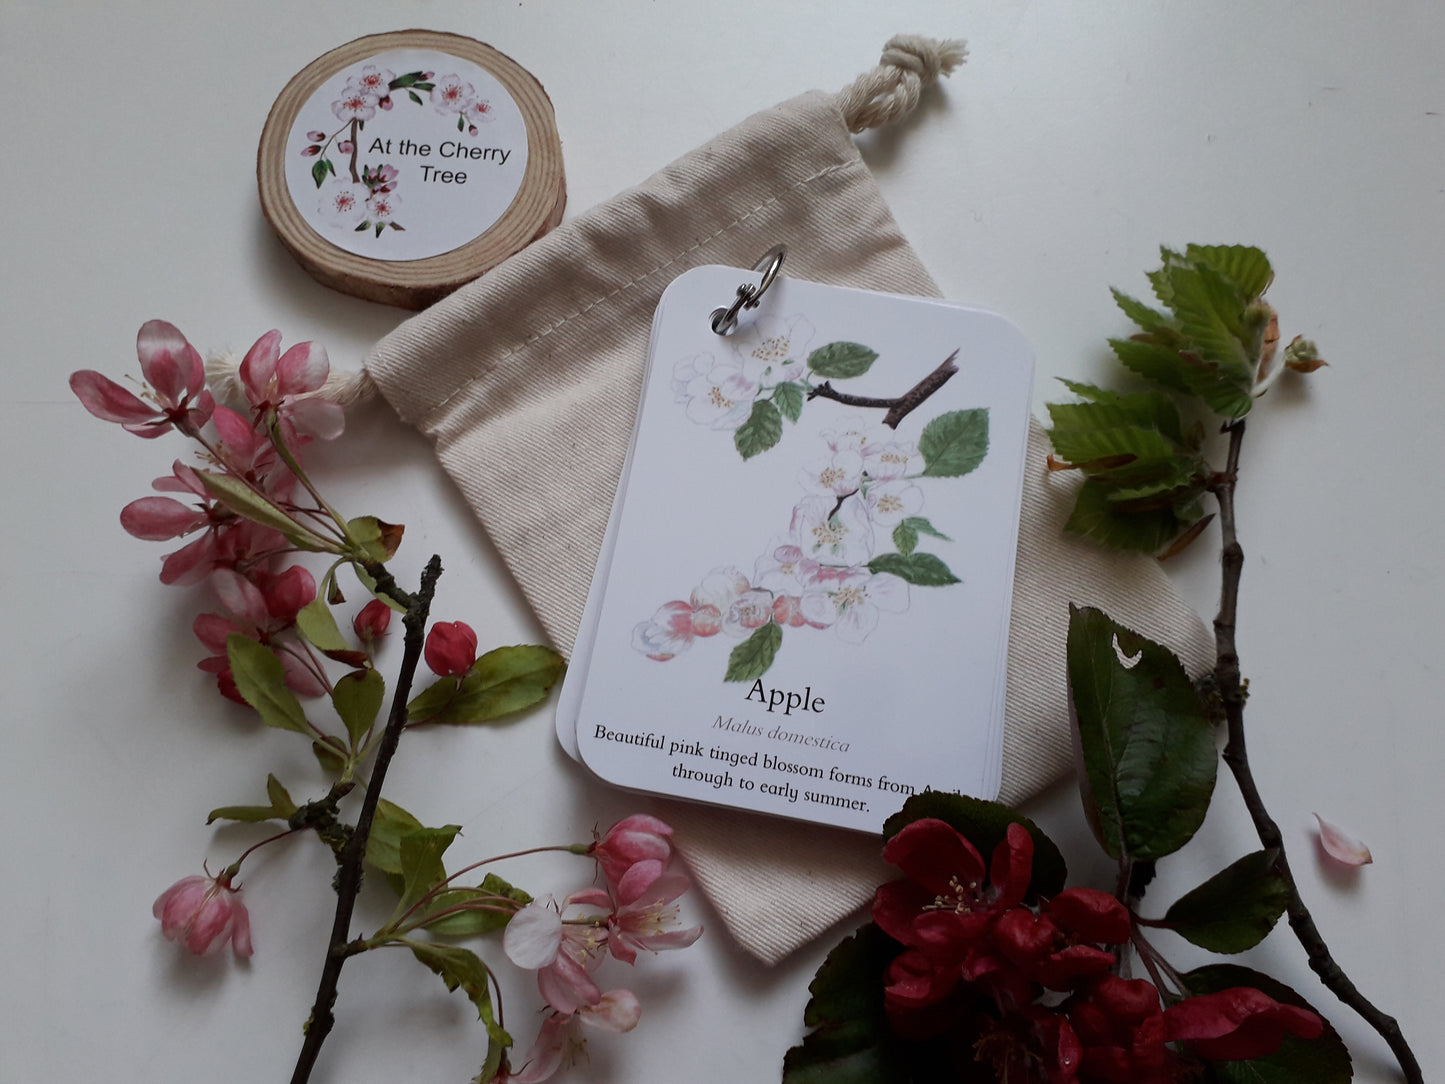 Blossom, Catkins and Flowers - Pocket set